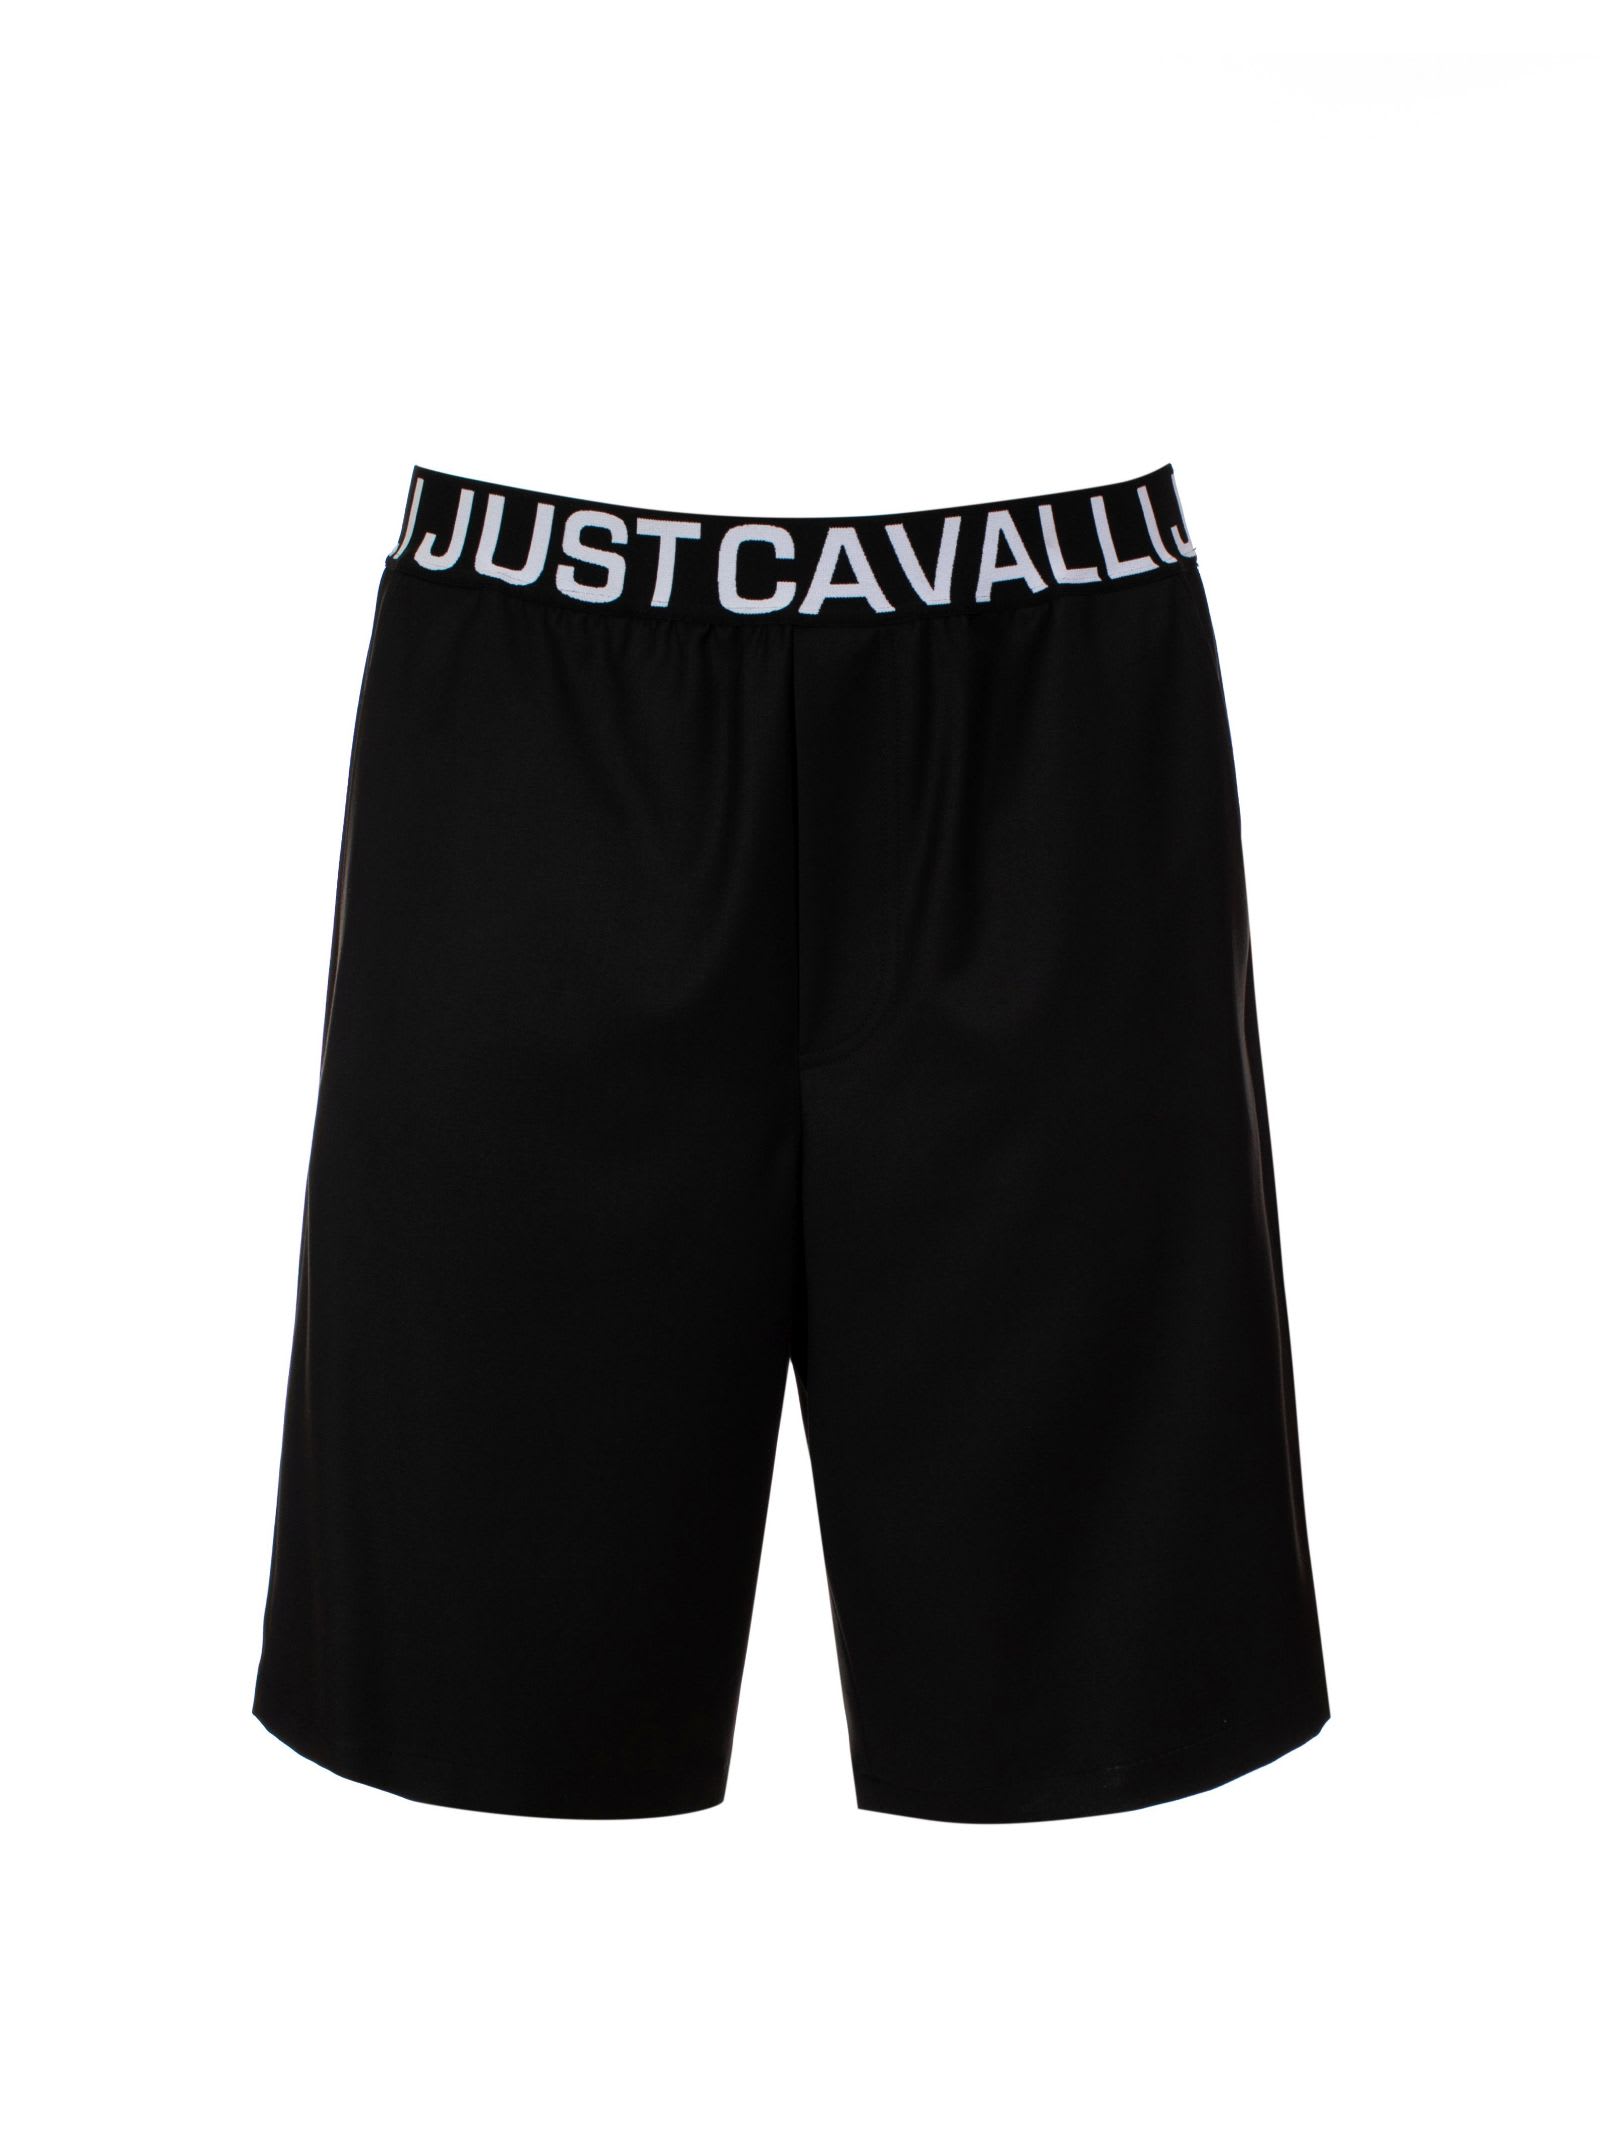 Roberto Cavalli Just Cavalli Shorts In Black